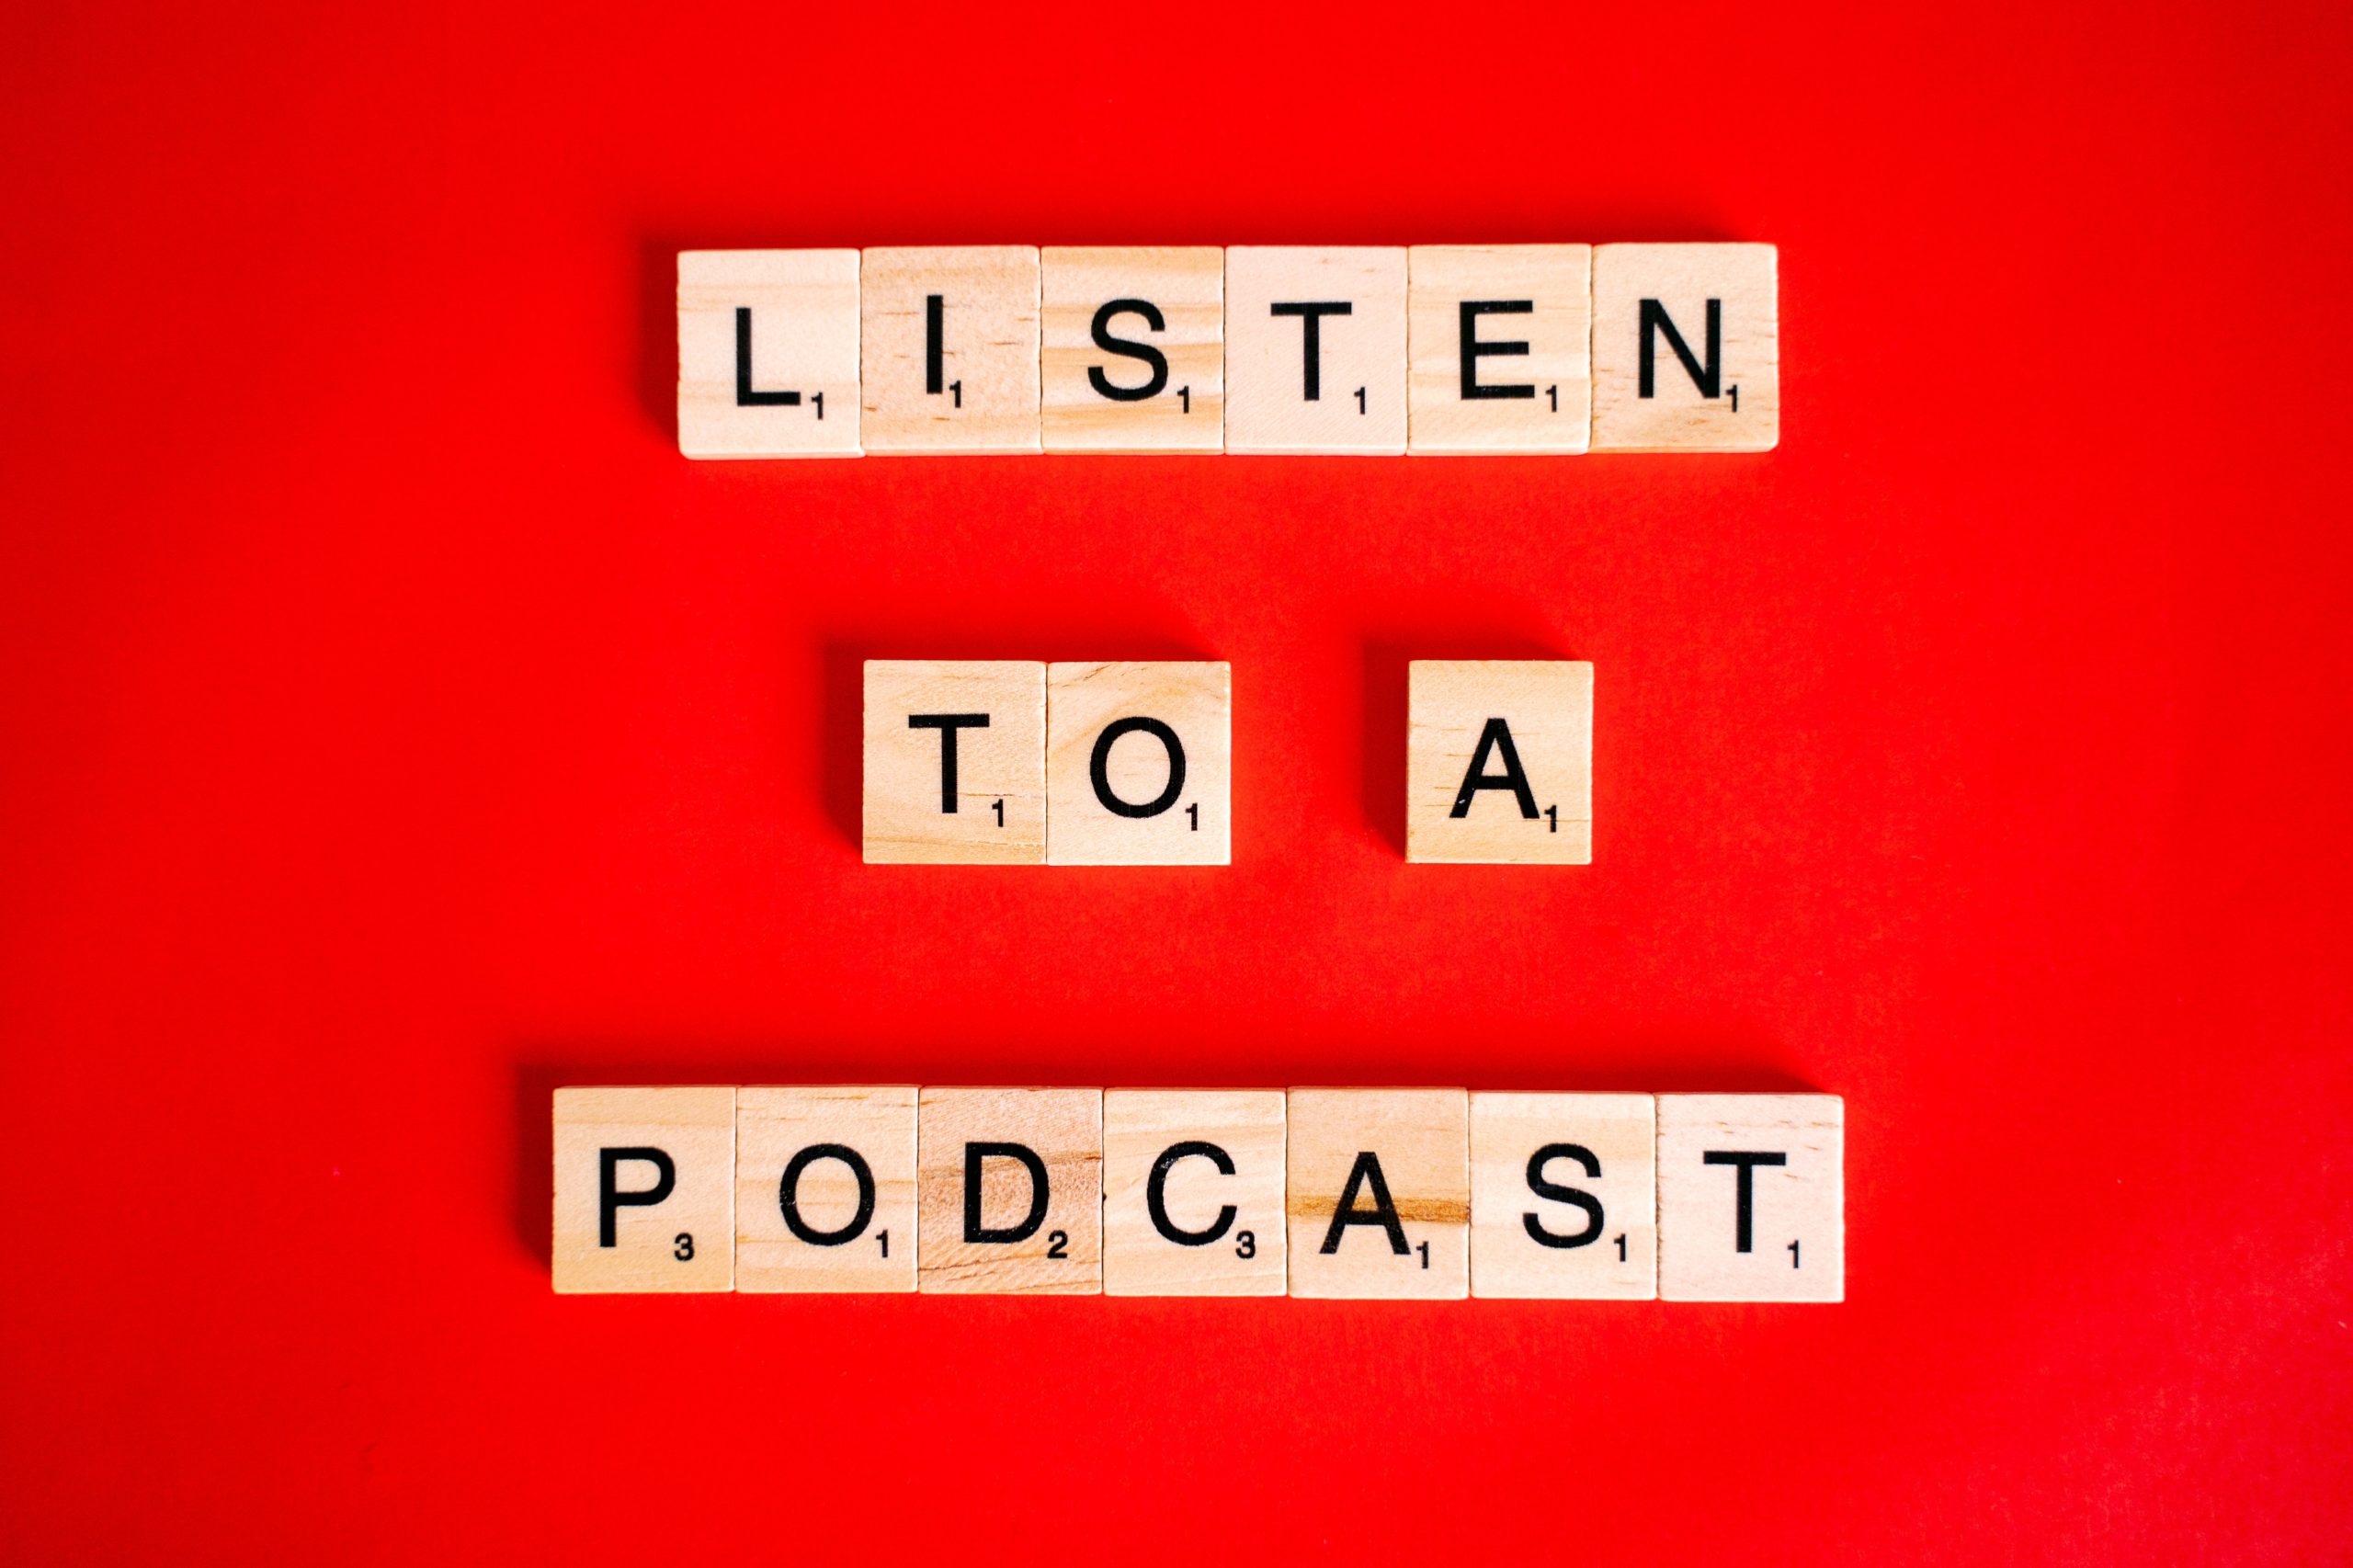 Text “Listen to a podcast” written on Scrabble tiles.